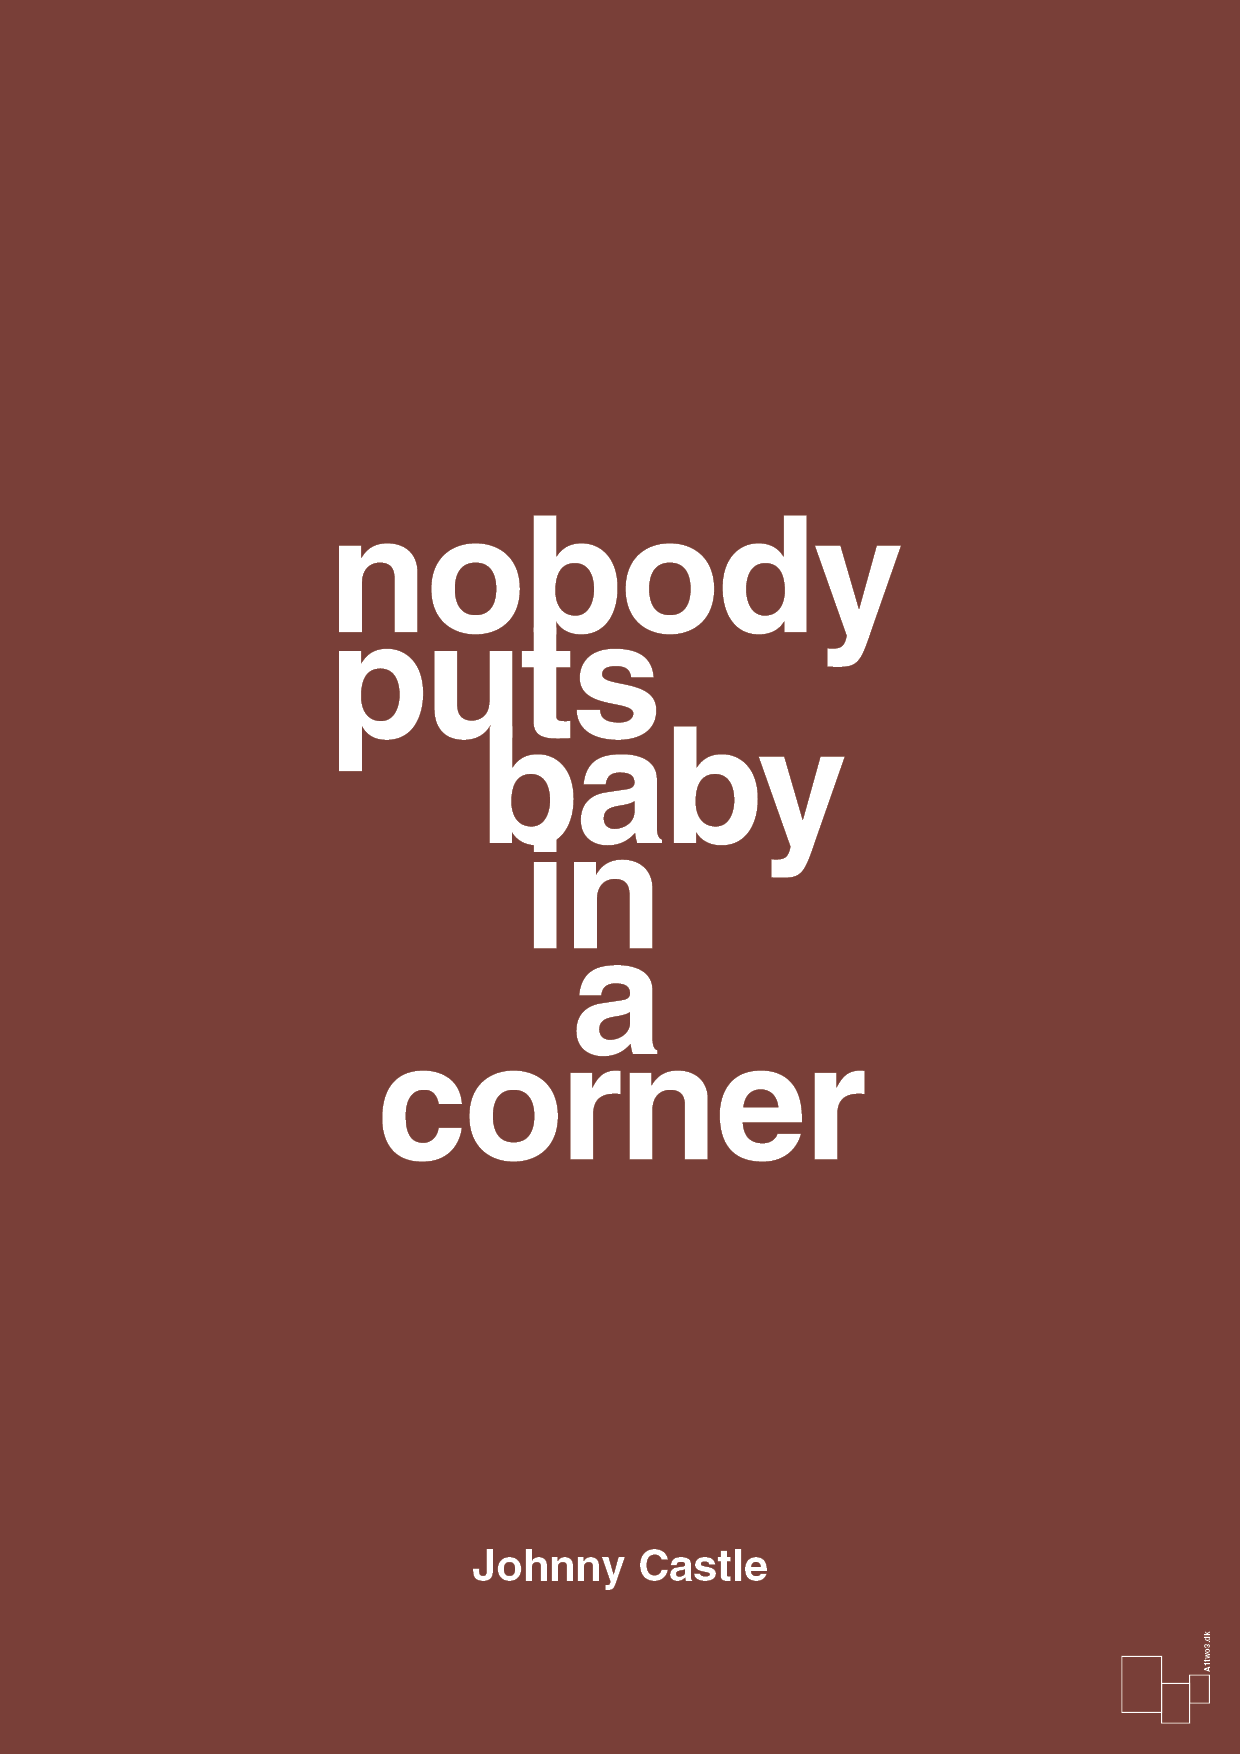 nobody puts baby in a corner - Plakat med Citater i Red Pepper